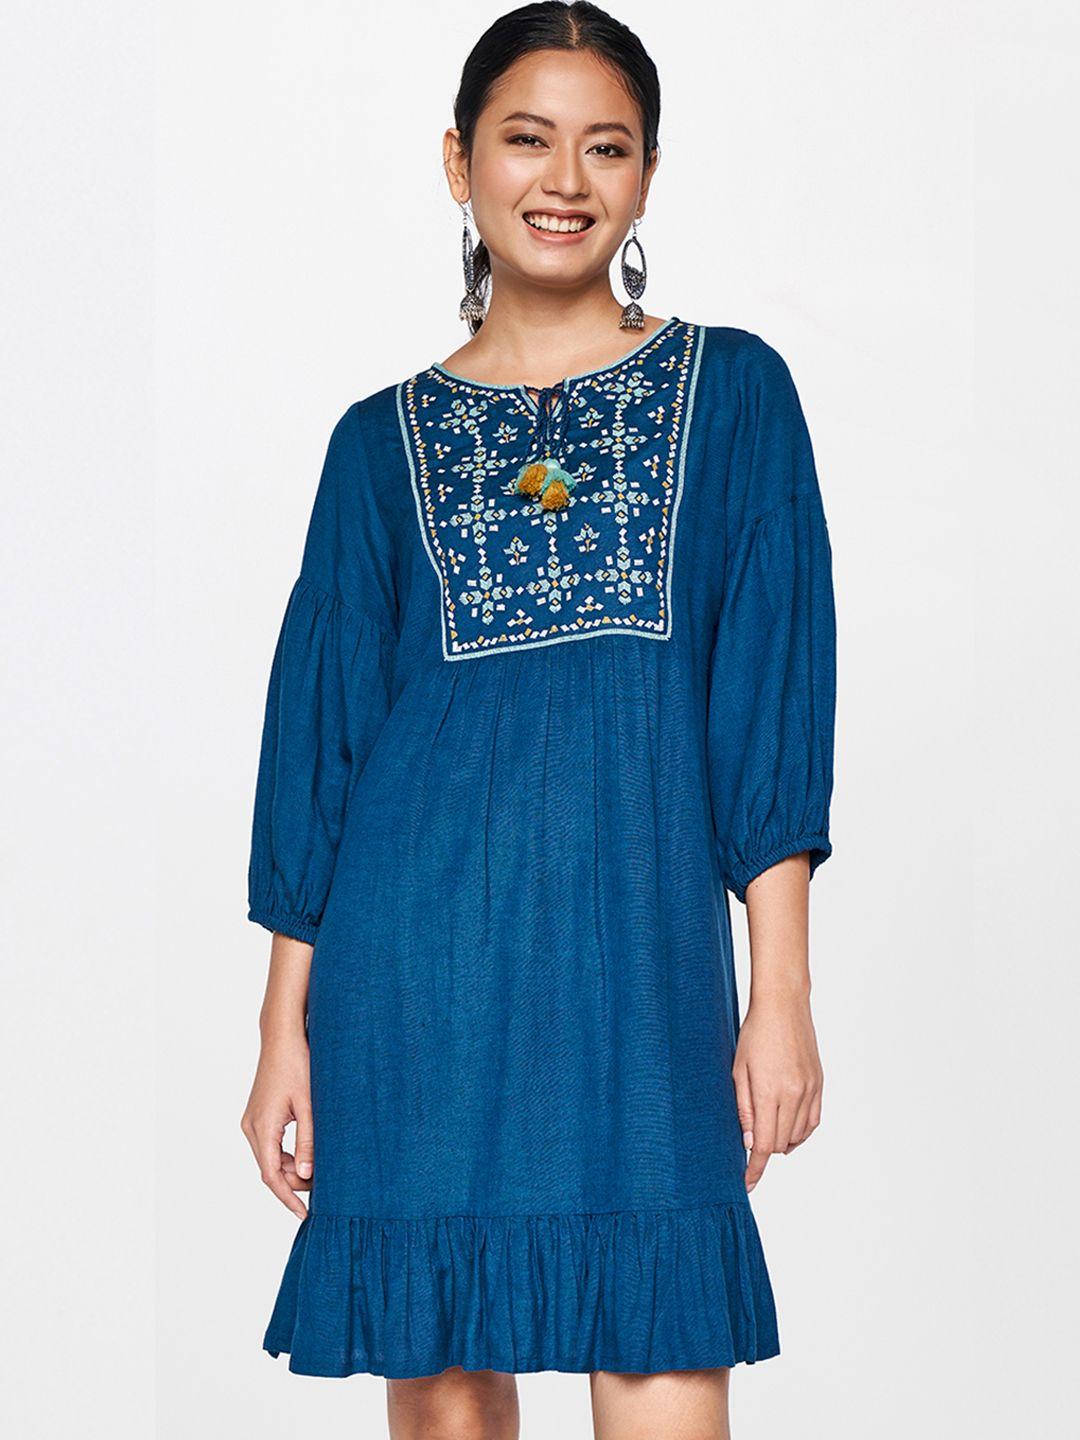 global-desi-blue-embroidered-flounce-a-line-dress